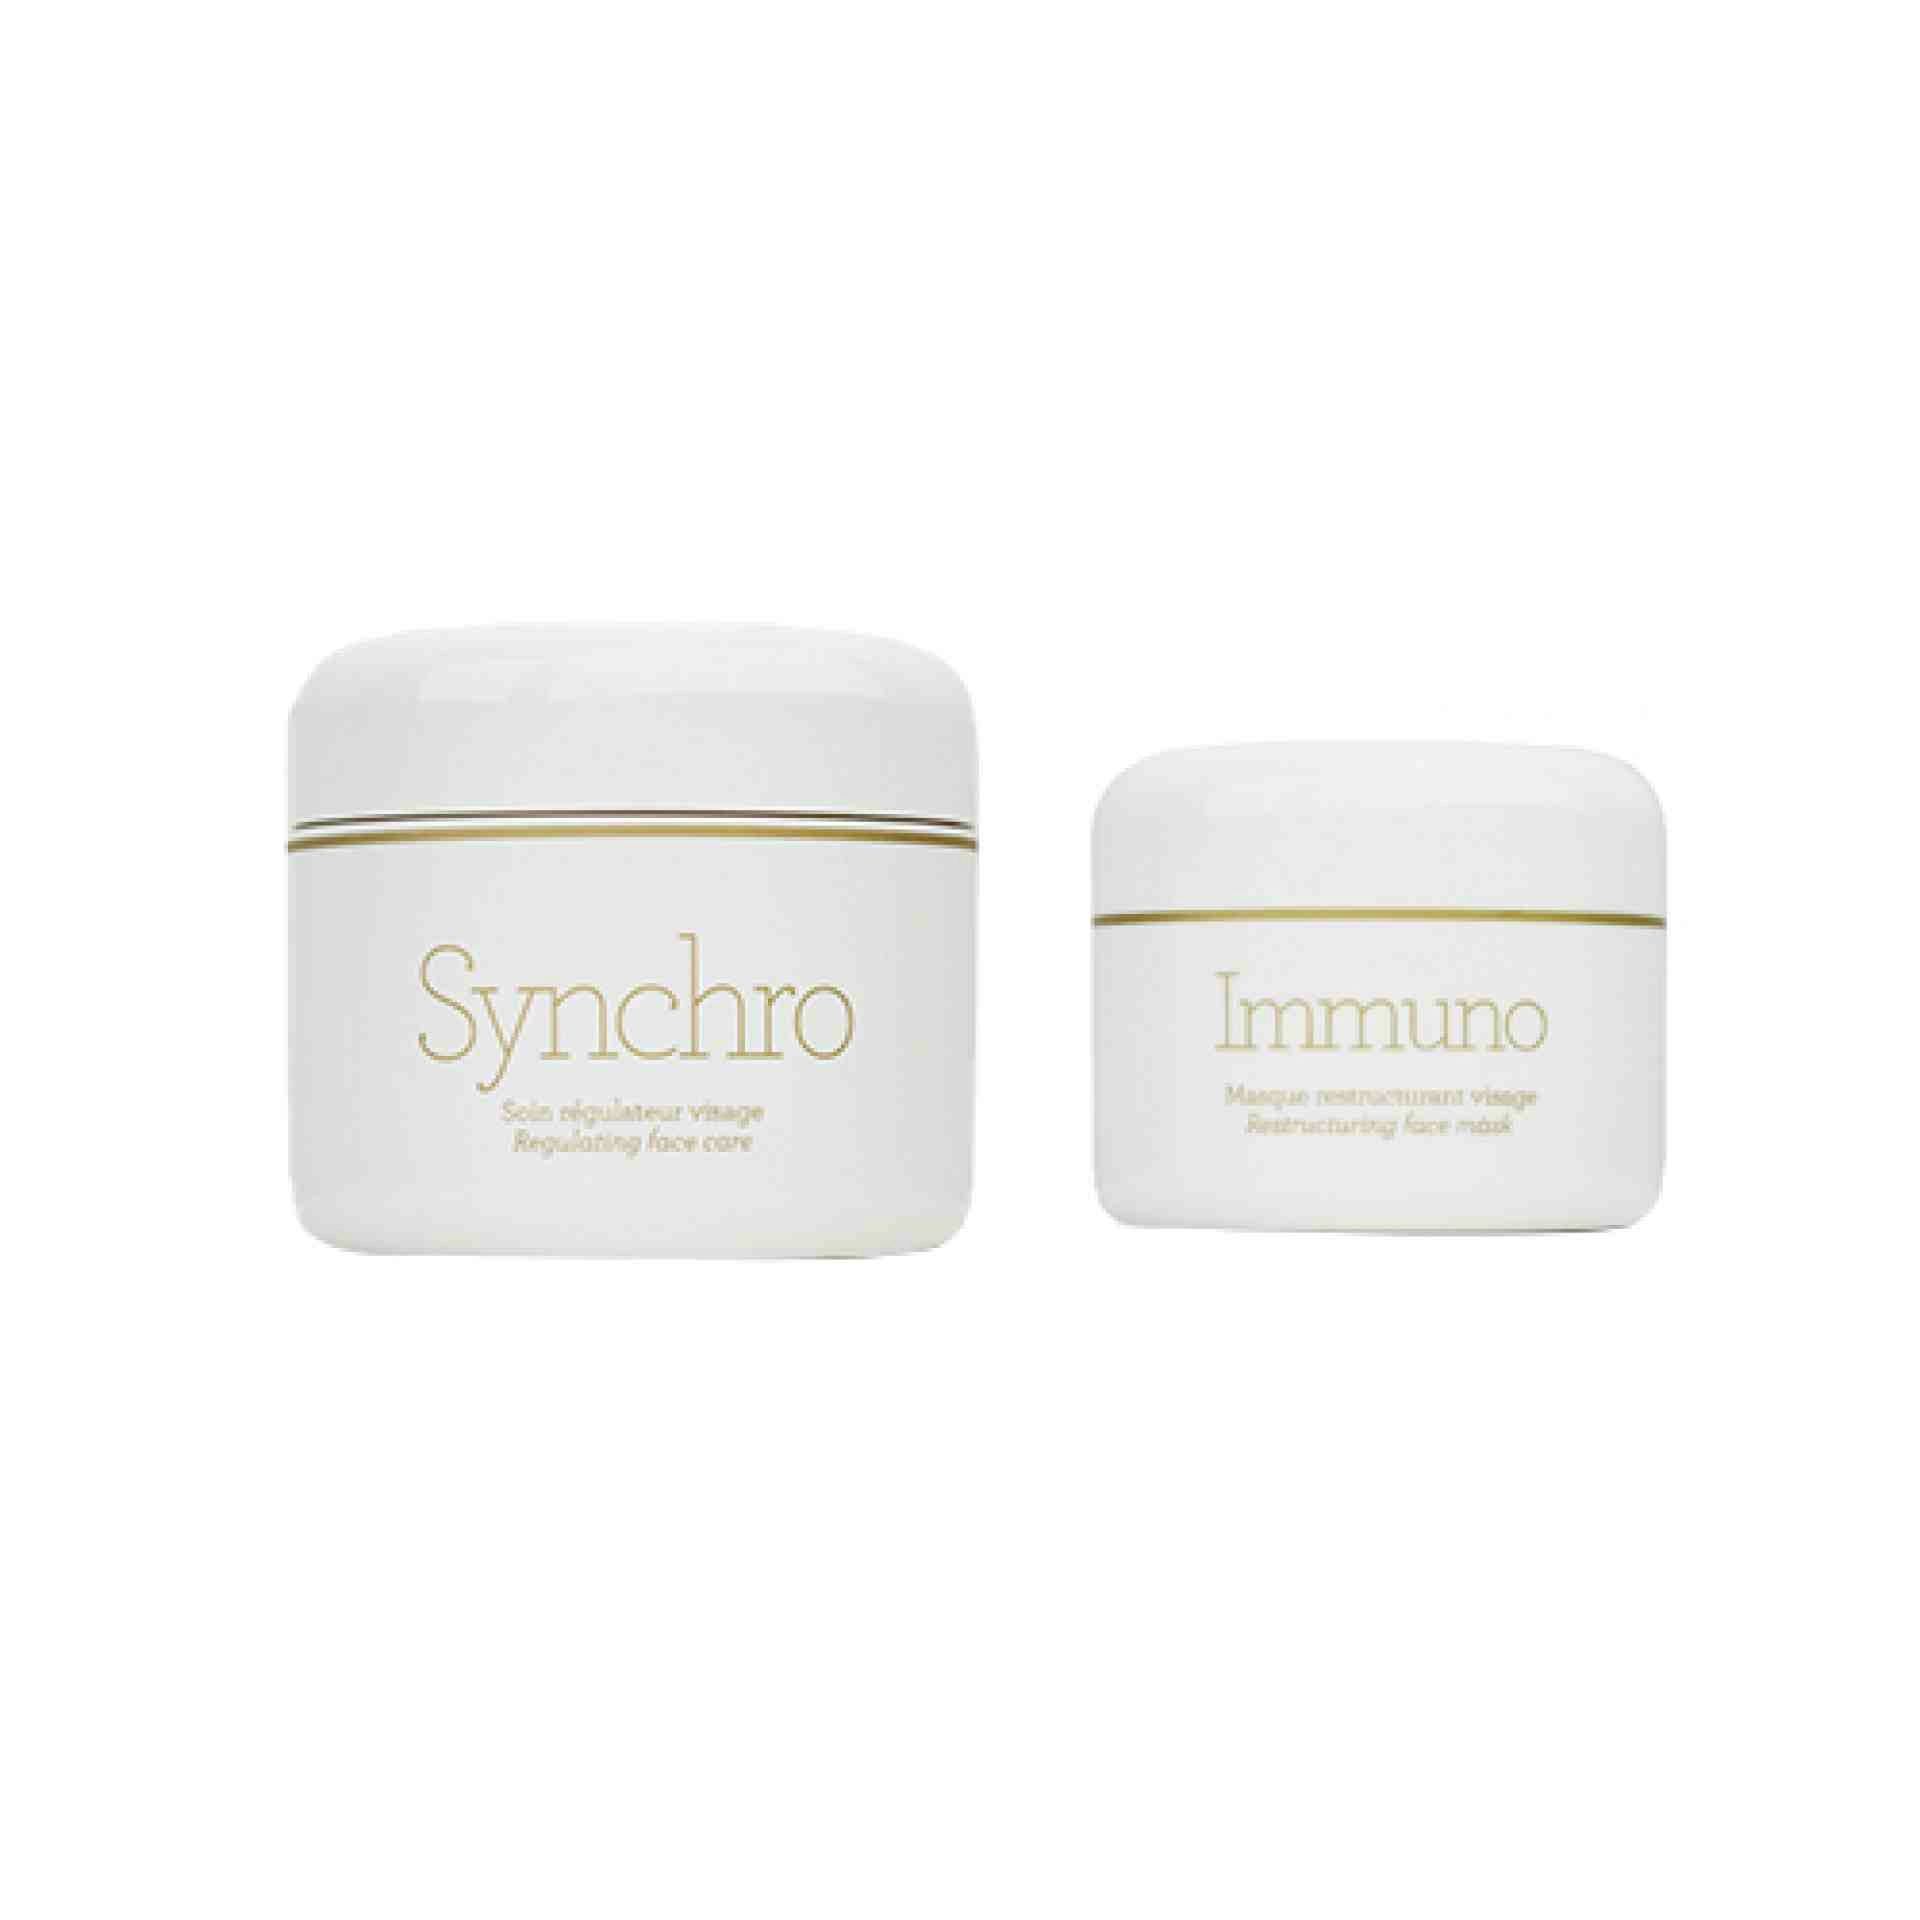 Pack Synchro 50ml + Immuno 30ml + Lift Express 2x1ml | Pack regenerador - Gernétic ®